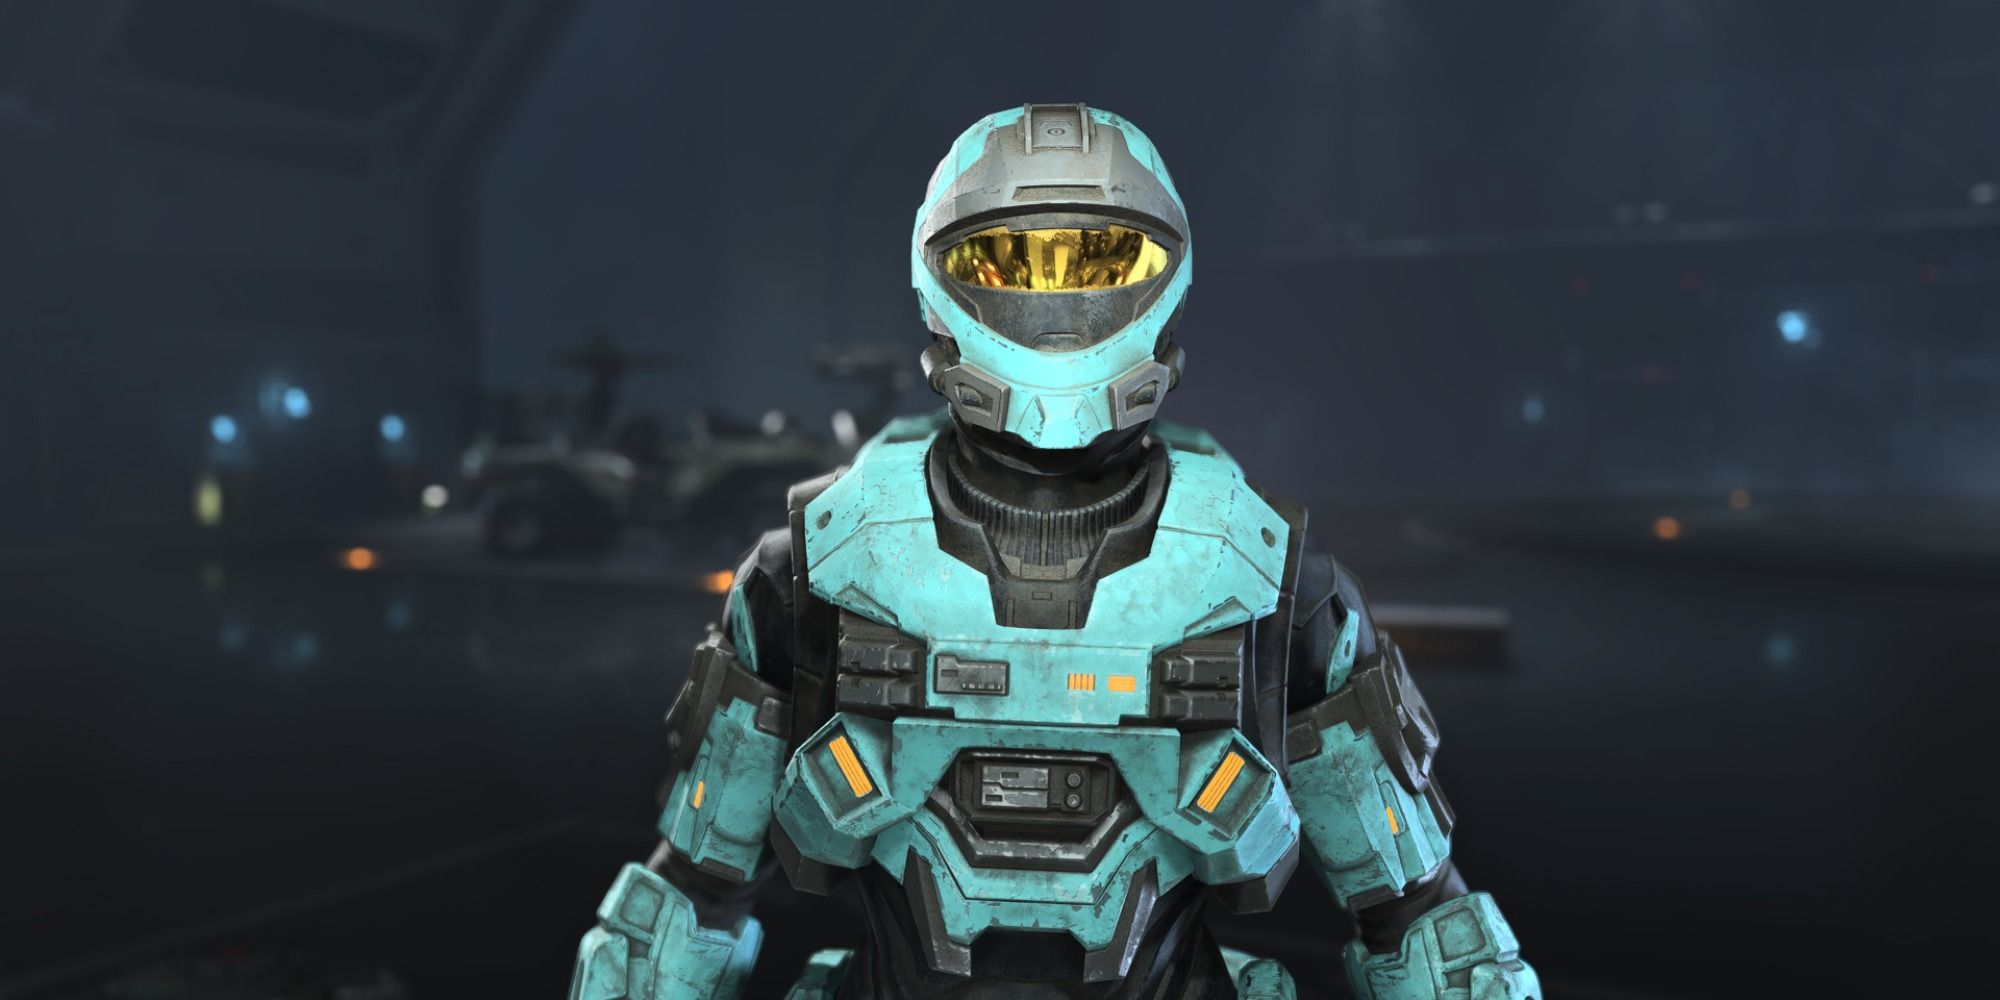 The Recon Helmet in Halo Infinite